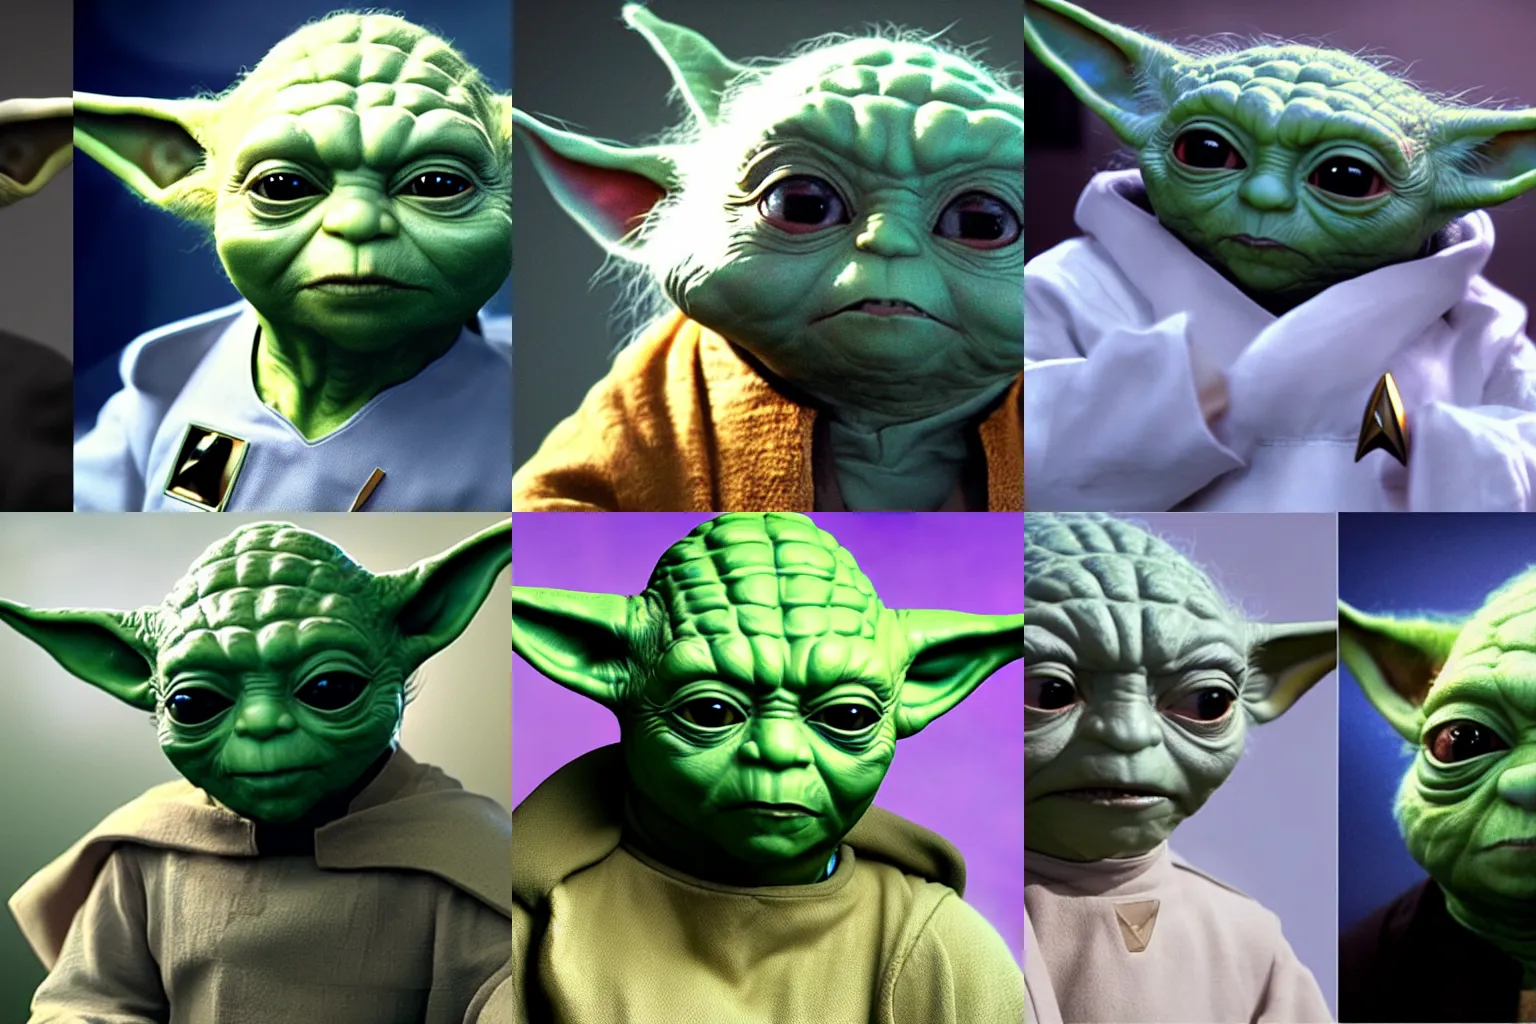 Prompt: 8k HDR hyperrealism stunning portrait photo of Yoda cosplaying as Star Trek crew member